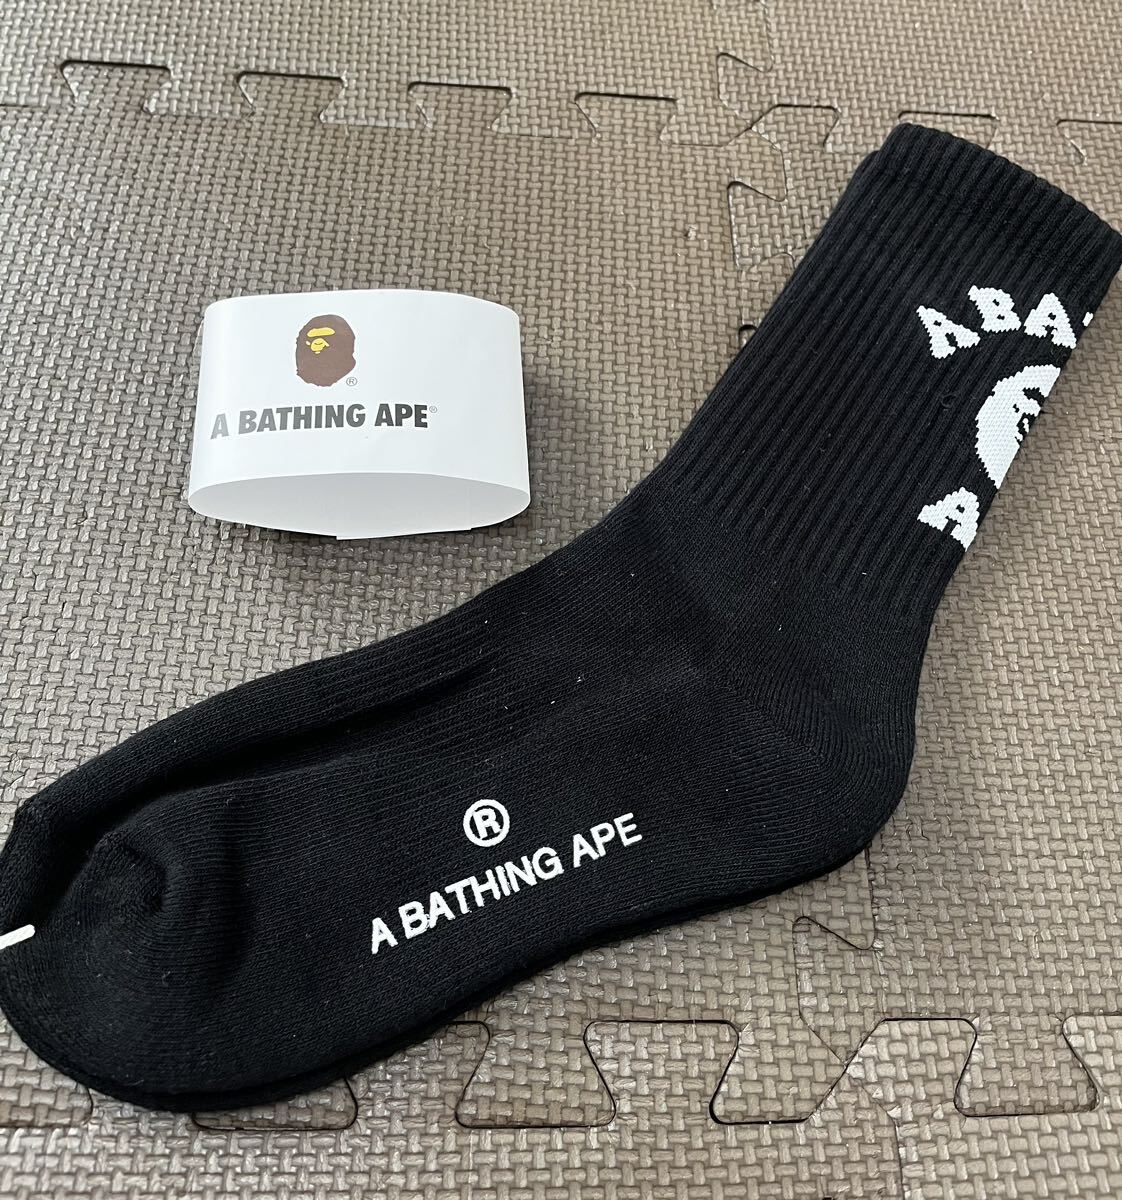 A bathing ape アベイシングエイプ man's 靴下 ソックス socks 4セット